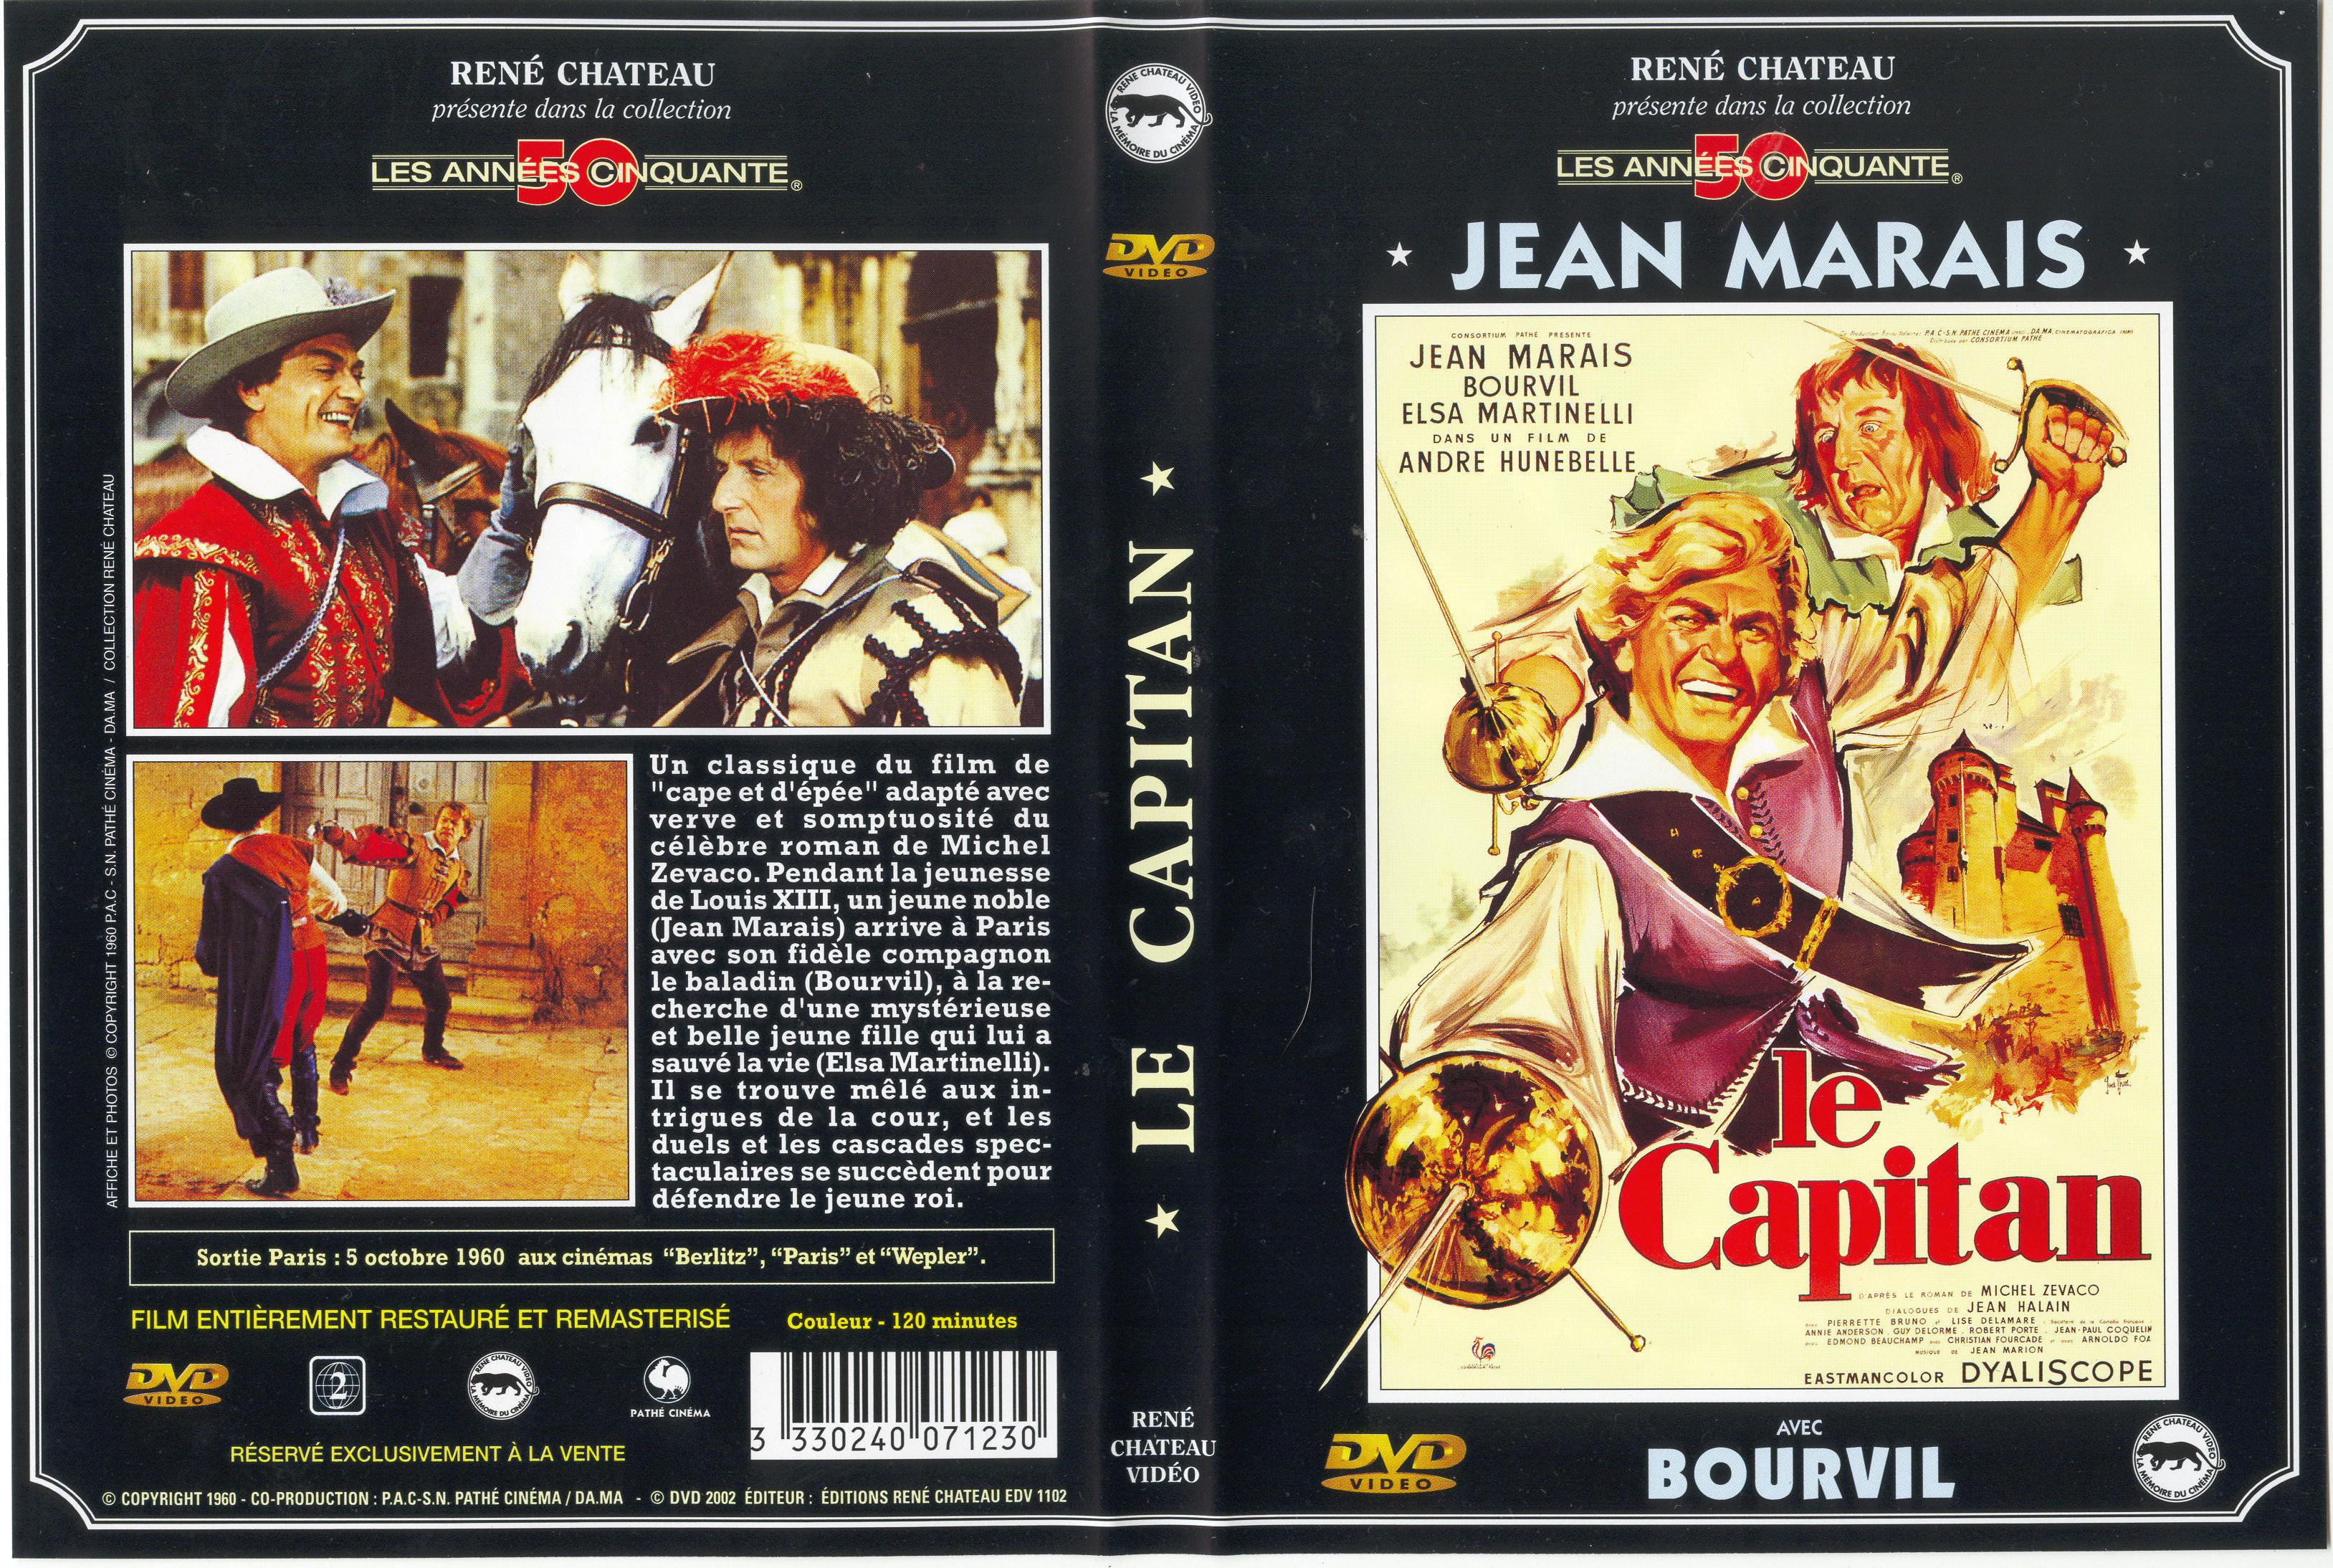 Jaquette DVD Le capitan v2